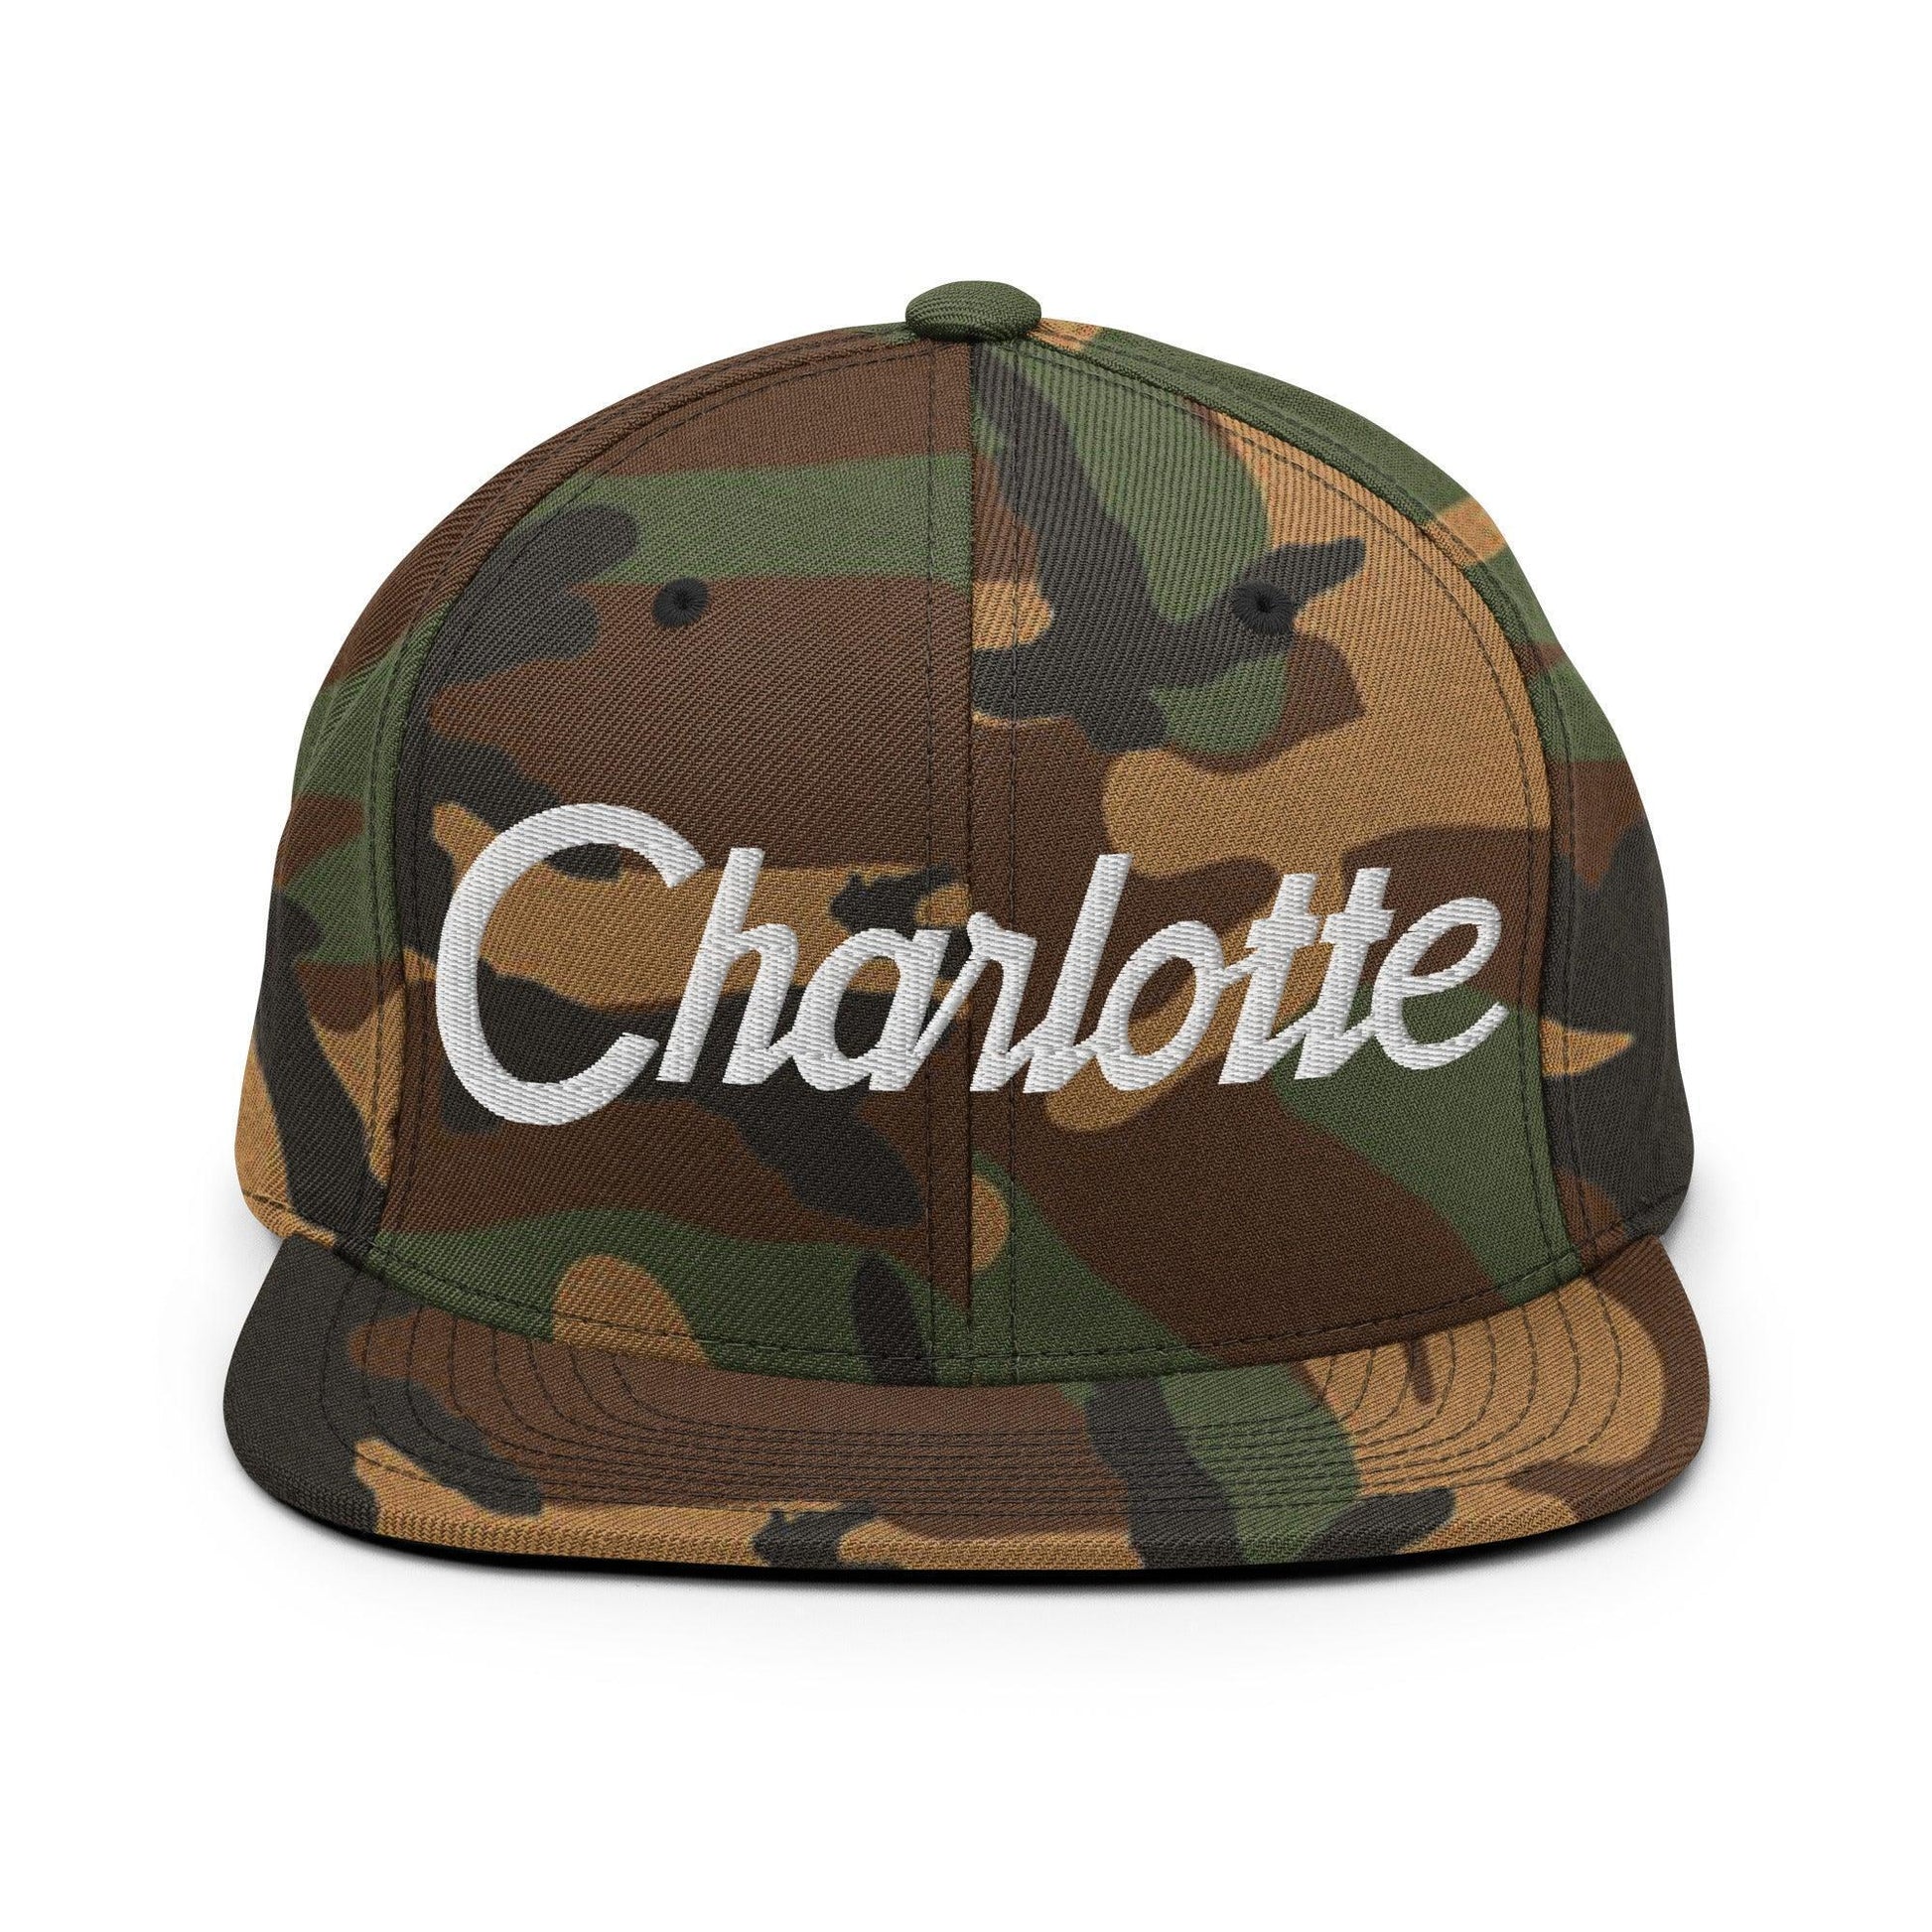 Charlotte Script Snapback Hat Green Camo